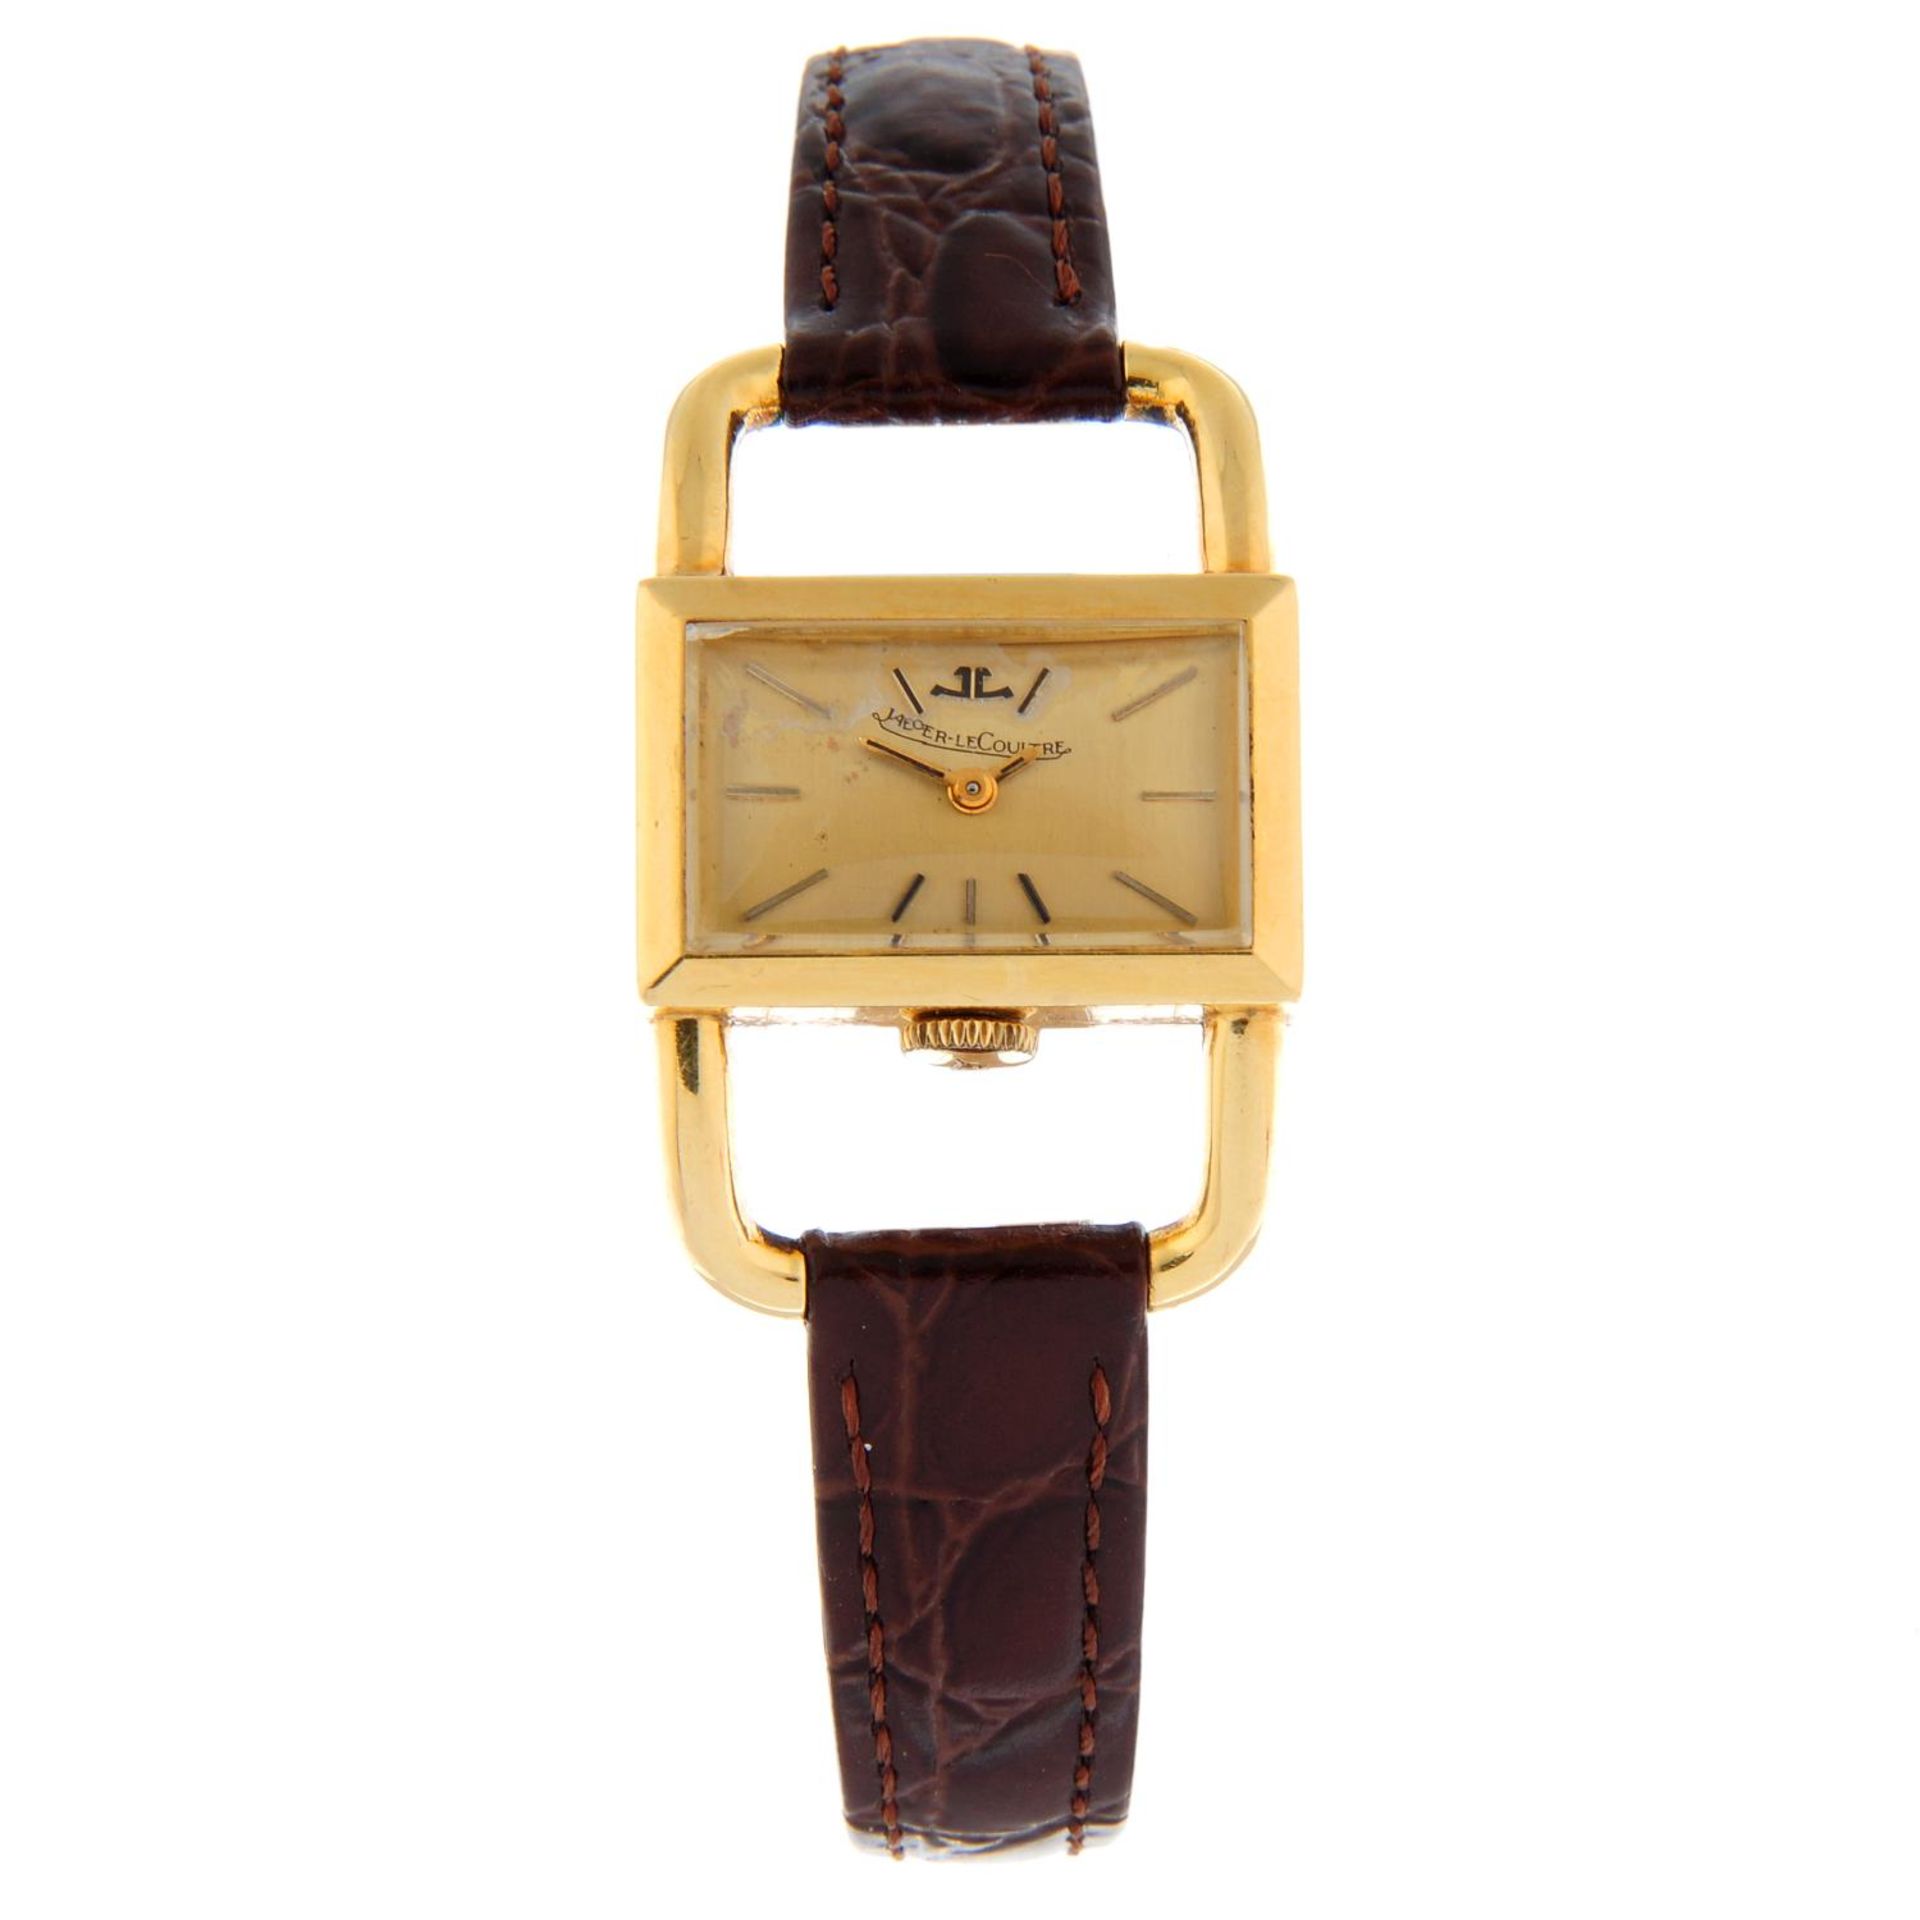 JAEGER-LECOULTRE - a wrist watch.